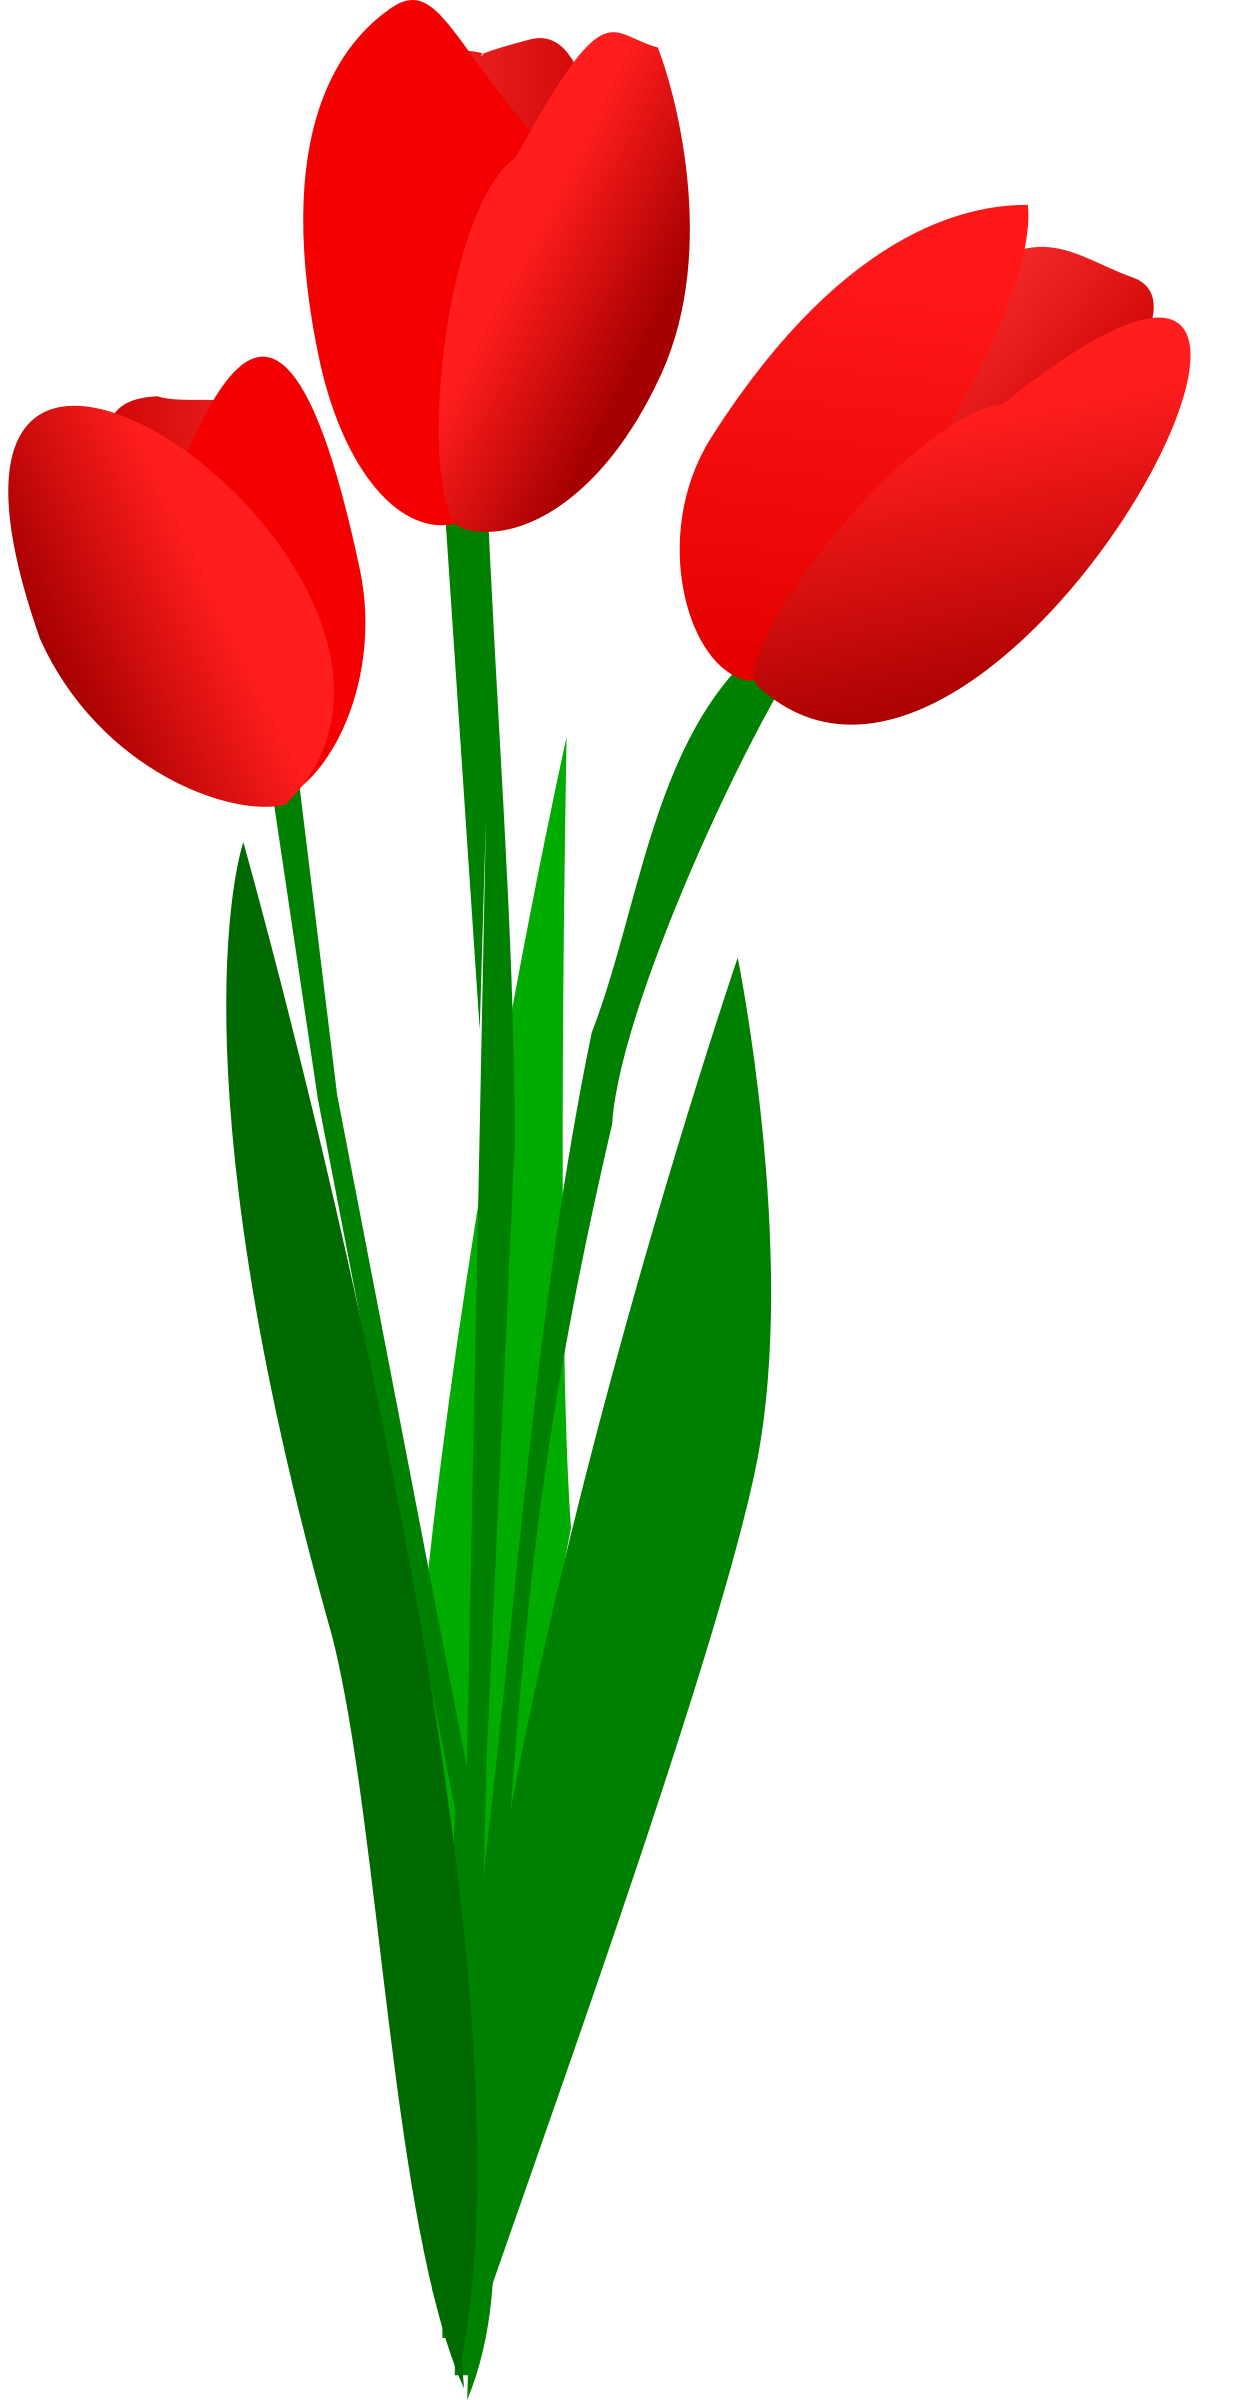 Daffodil clipart teacher. Three red tulips hoa